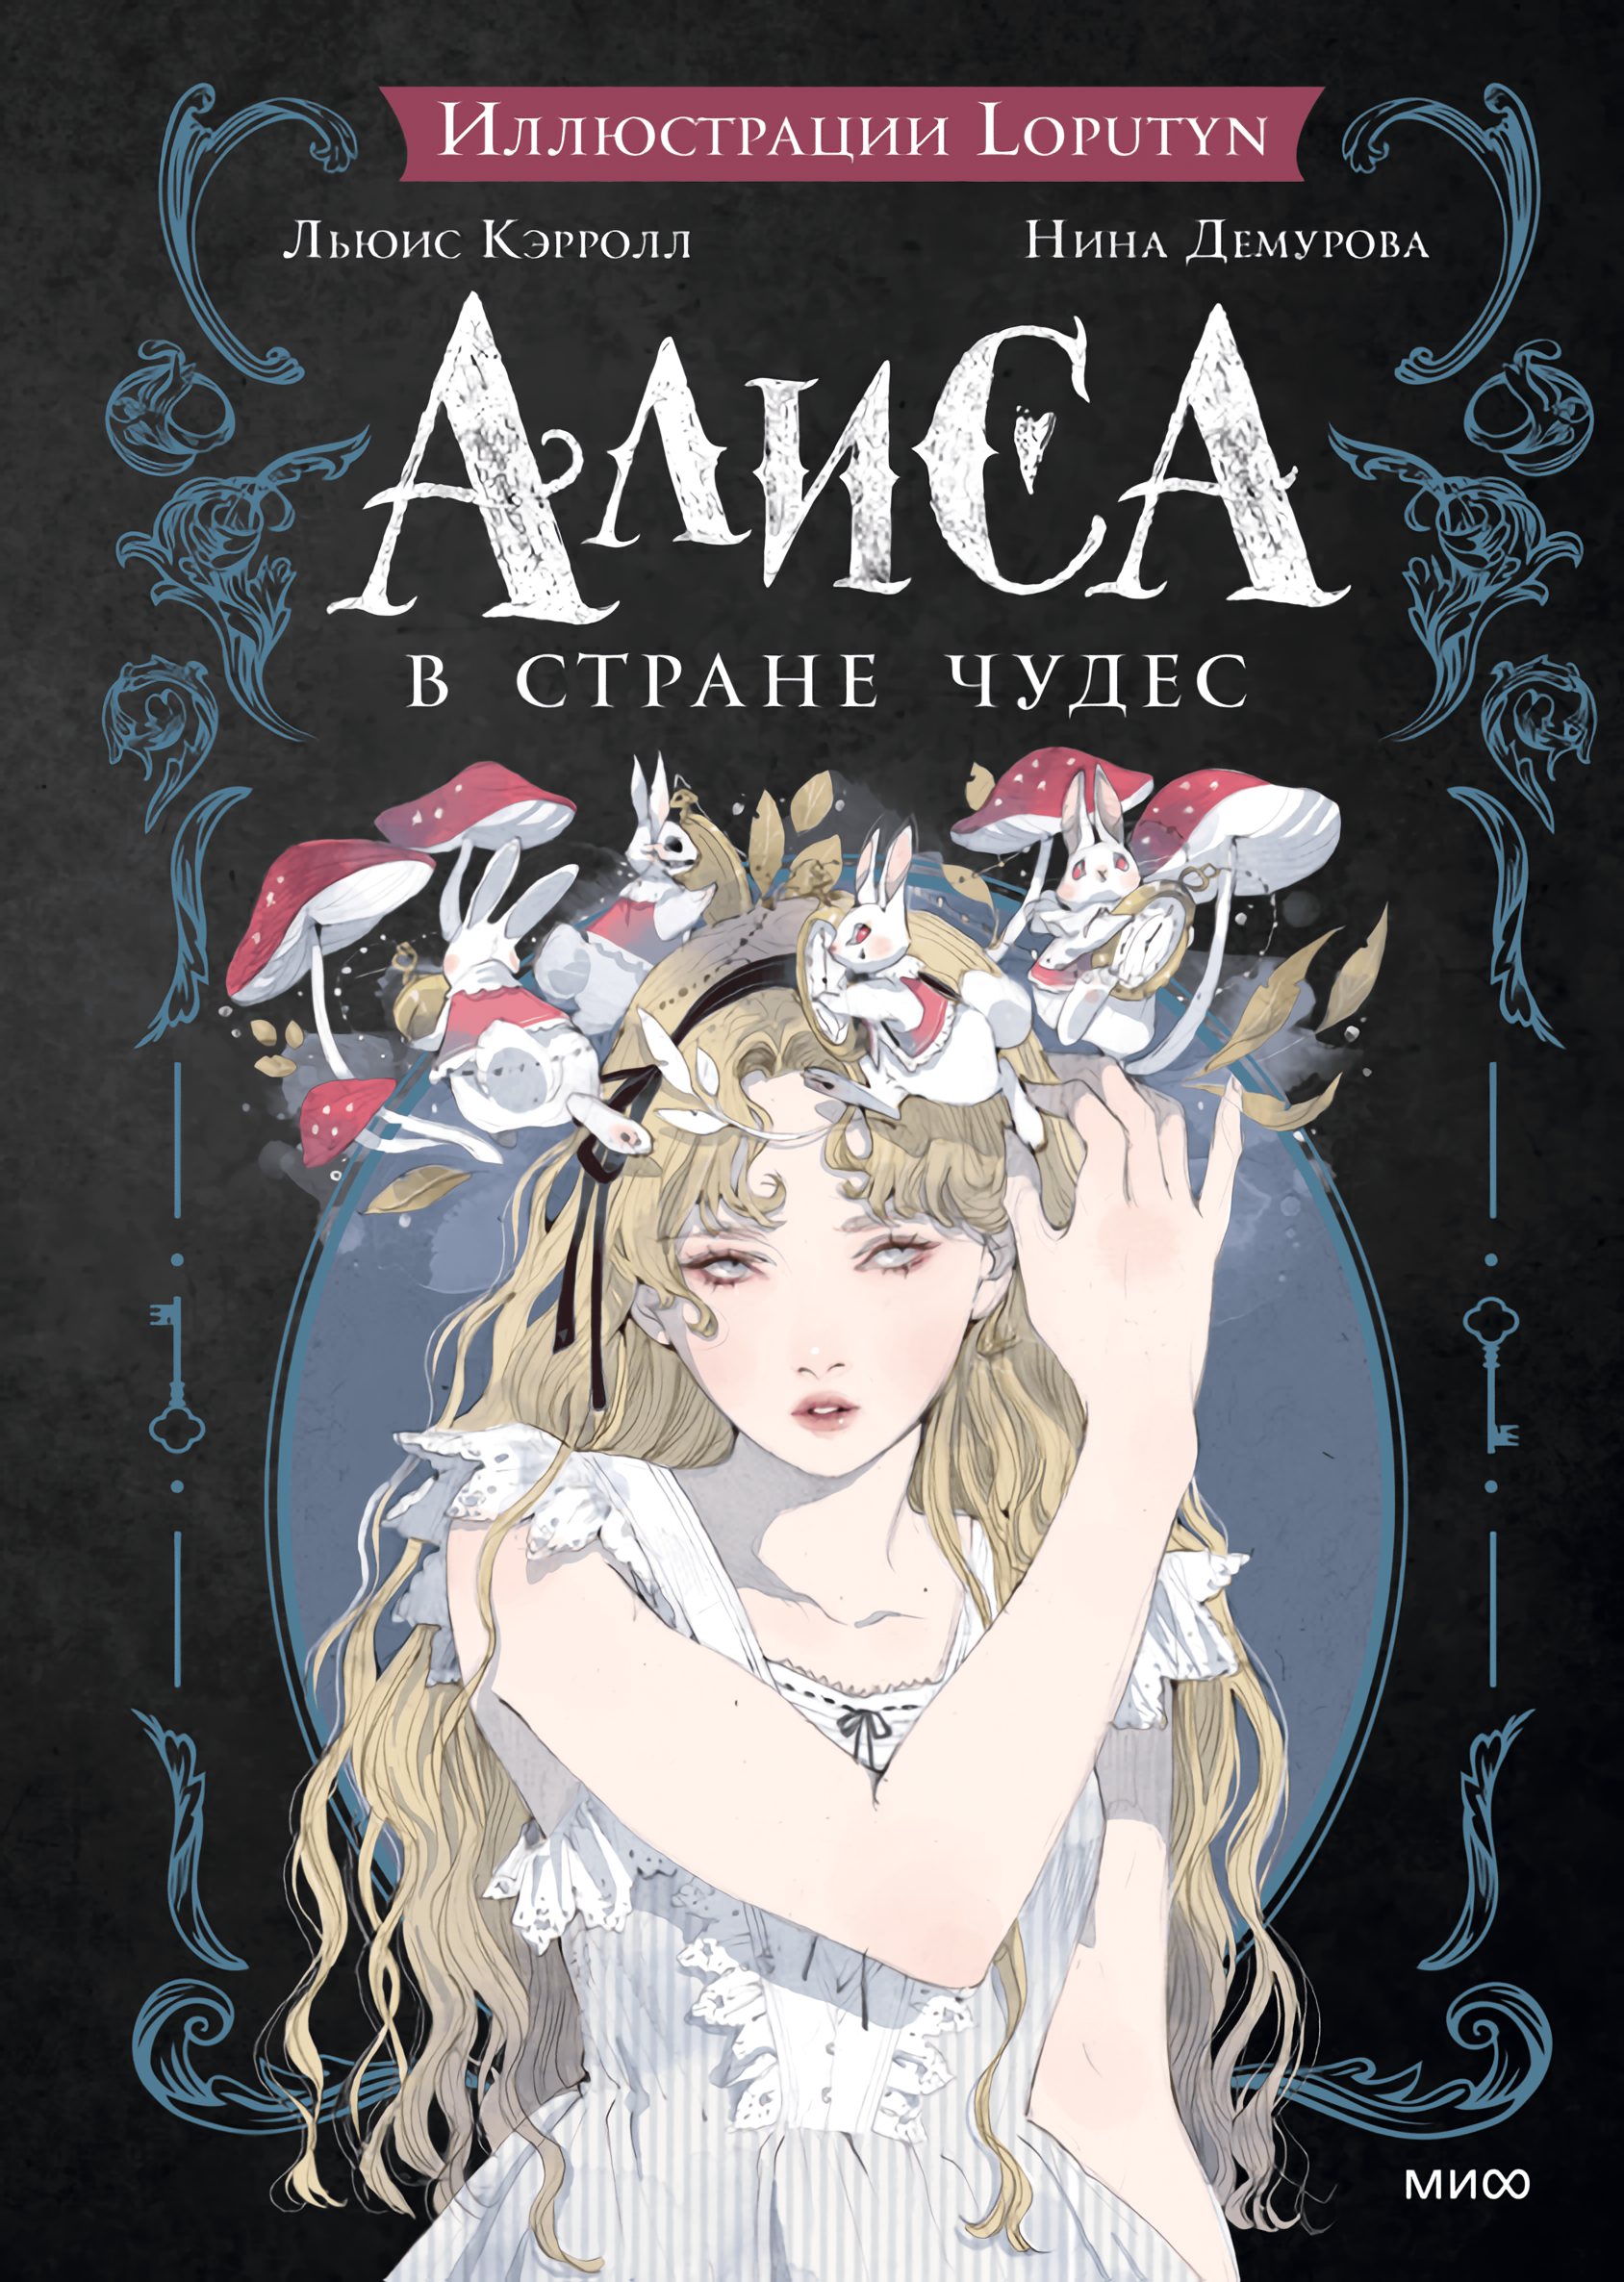 Алиса в Стране чудес (иллюстрации Loputyn)